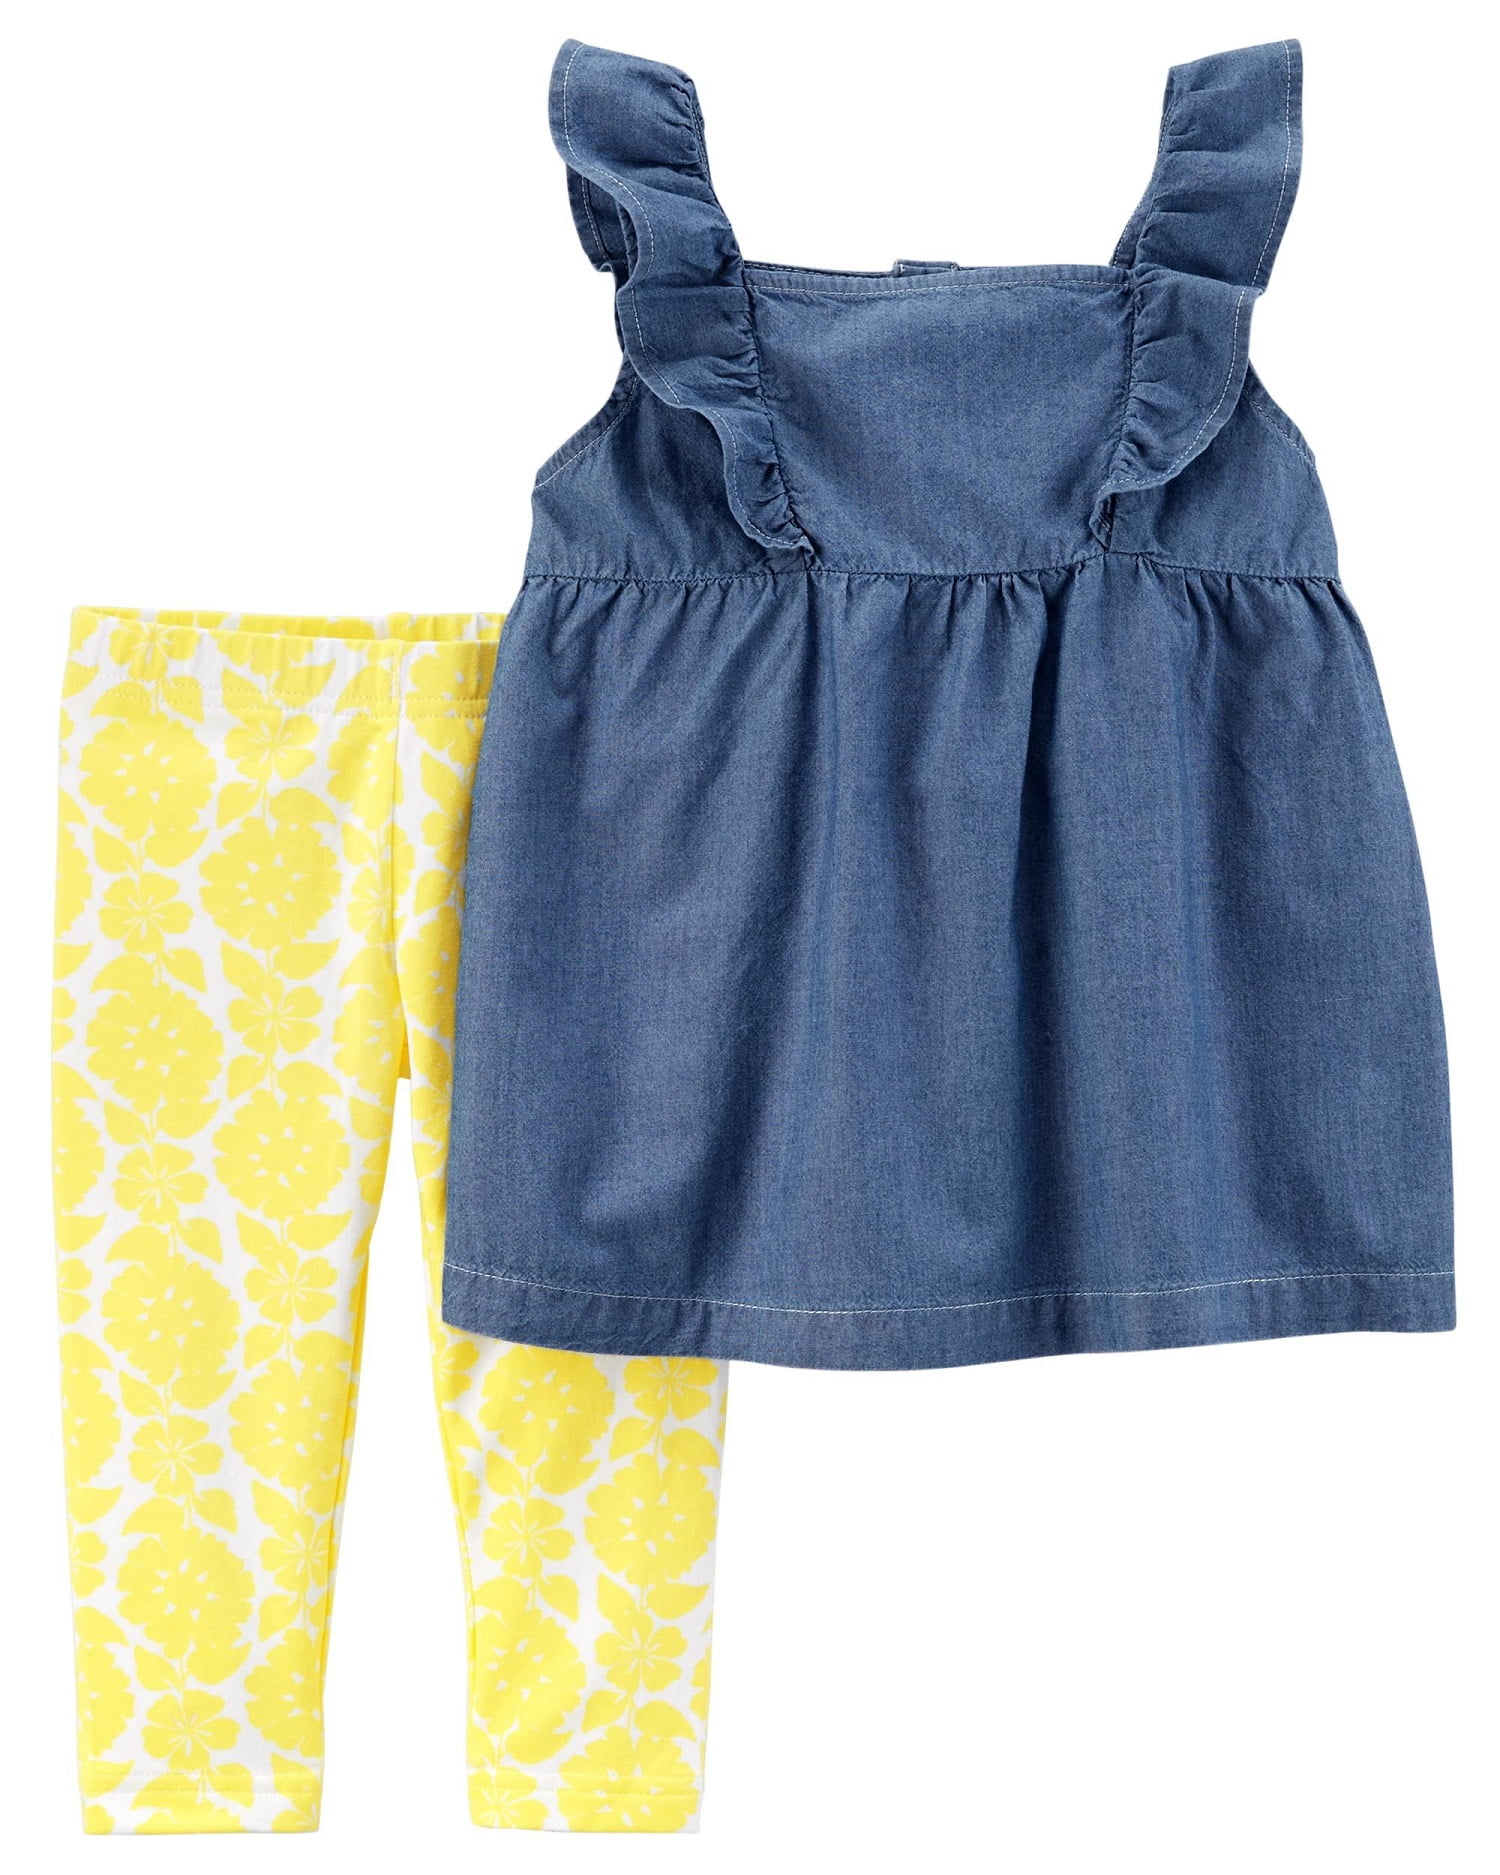 New Carter's 4 year Girls Neon Yellow Capri Leggings Stretch Pants Comfy Summer 